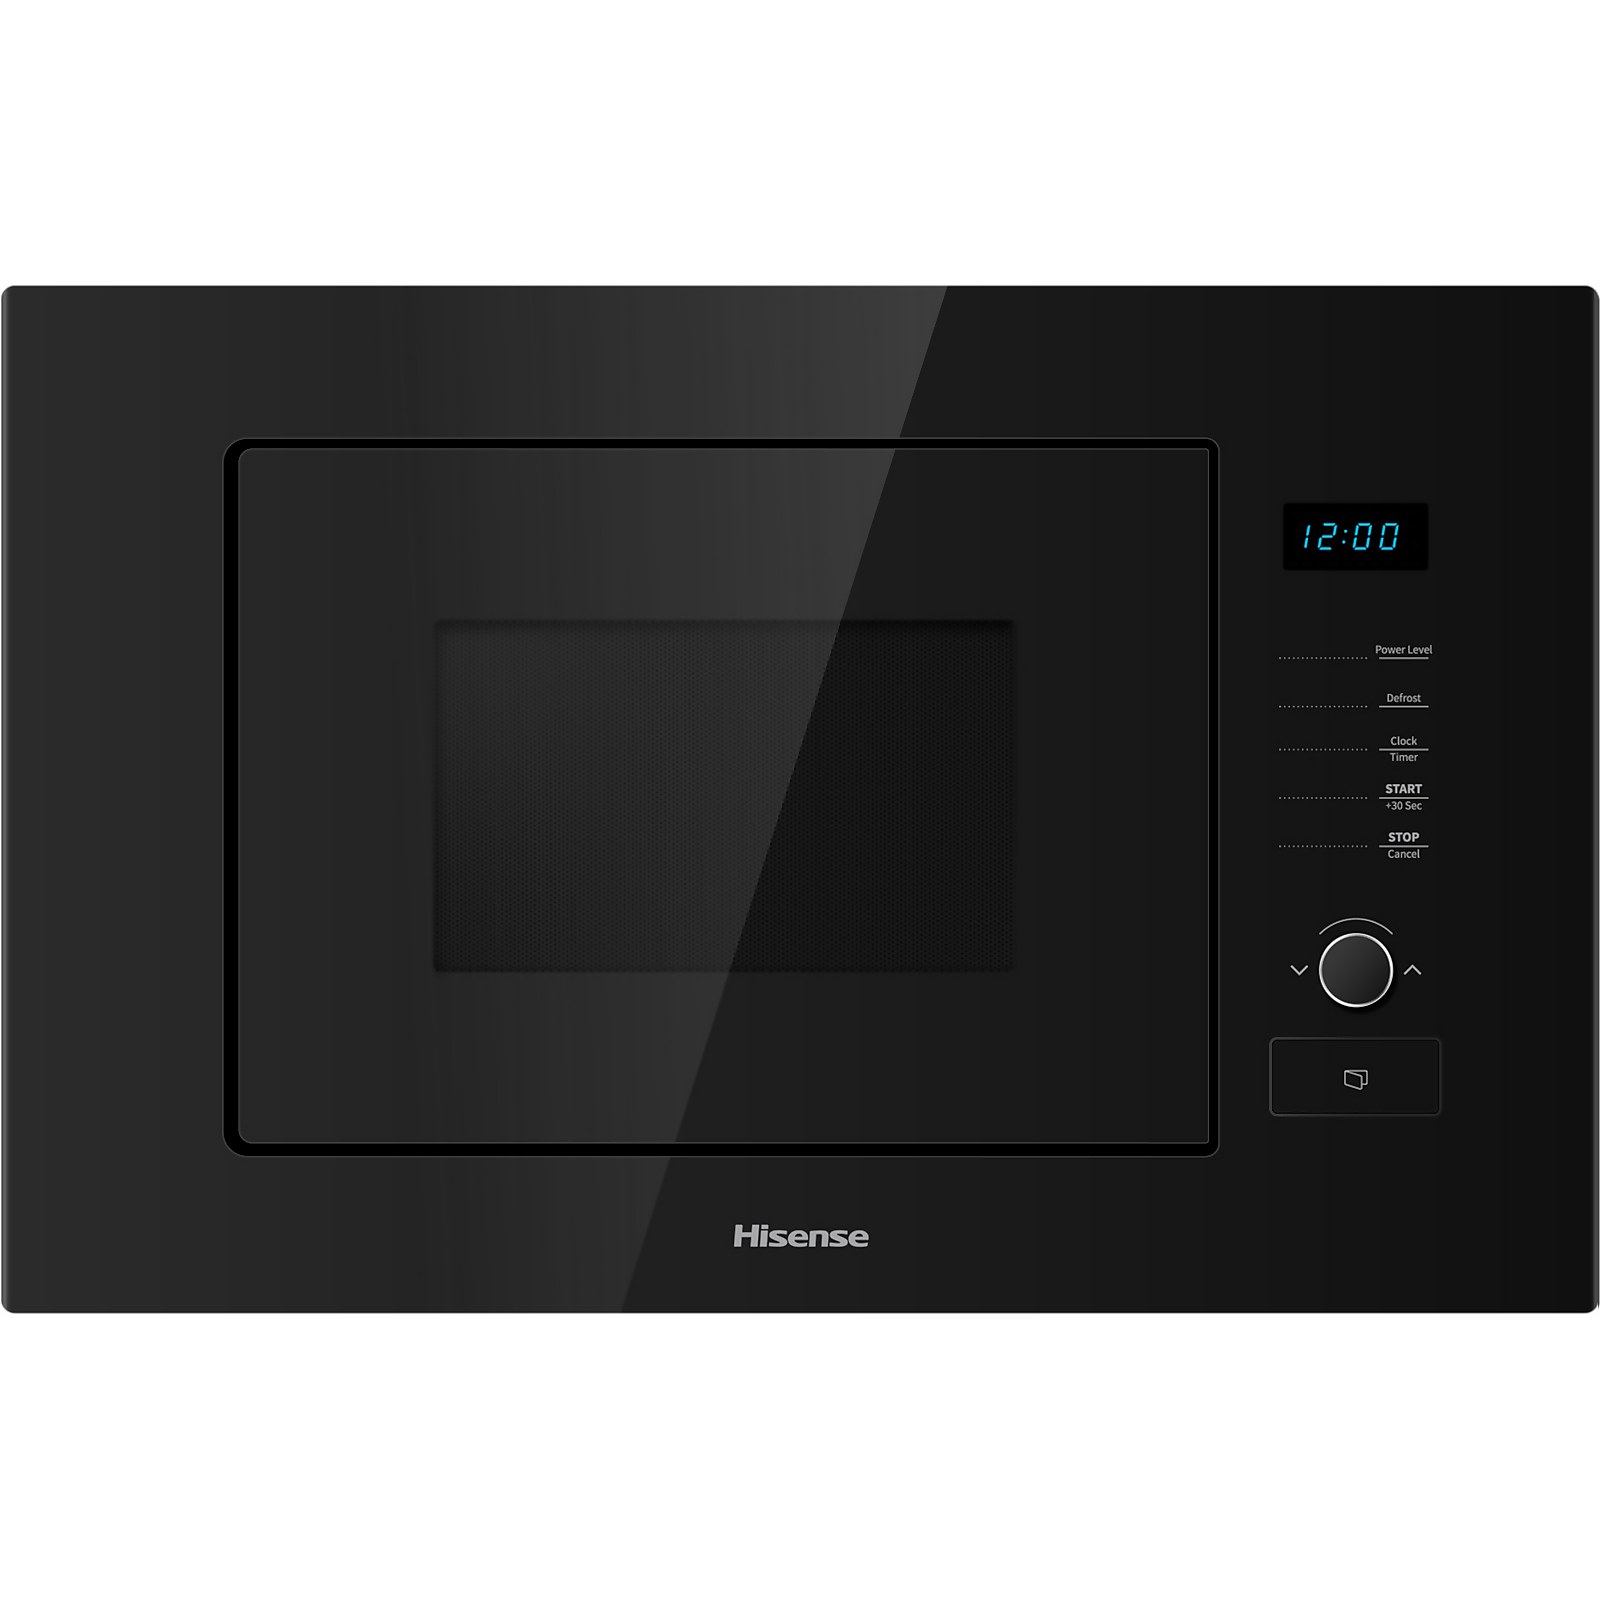 Hisense HB20MOBX5UK Built In Microwave - Black